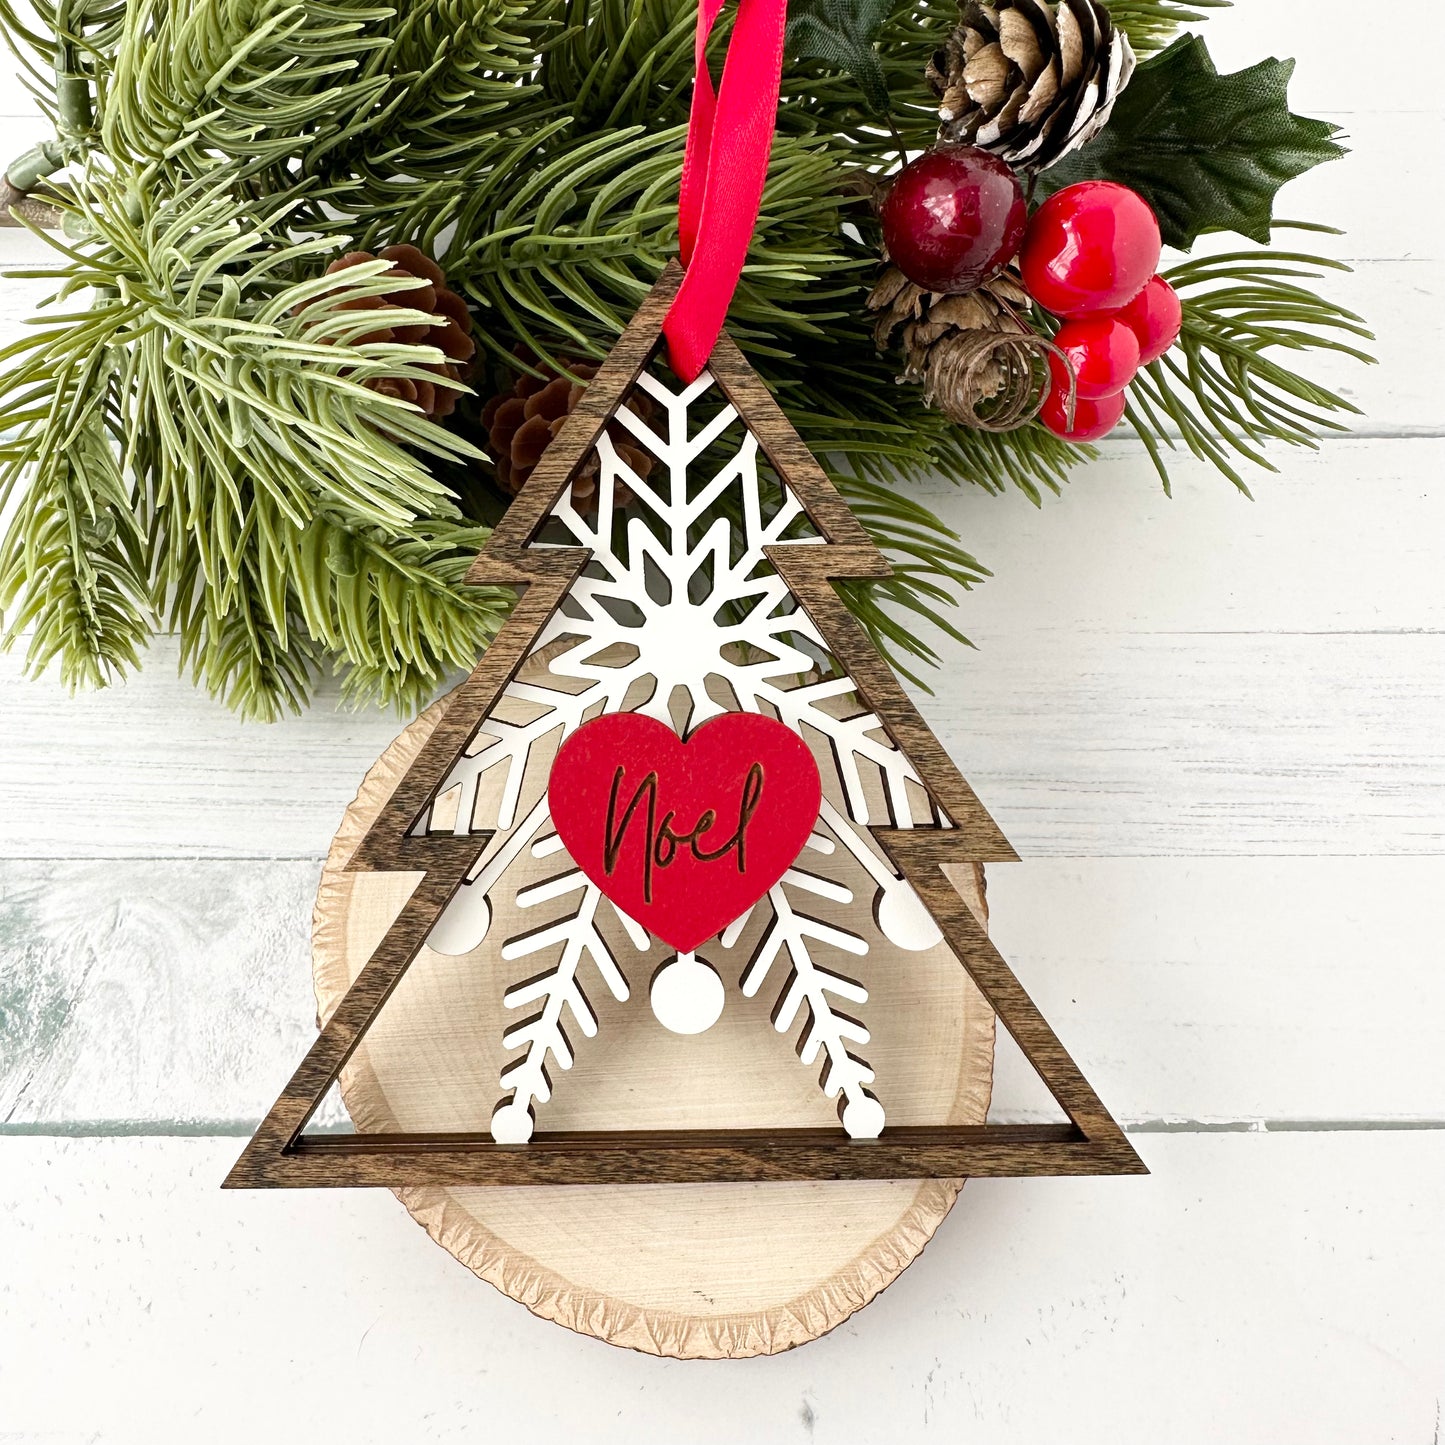 Snowflake Tree Ornament